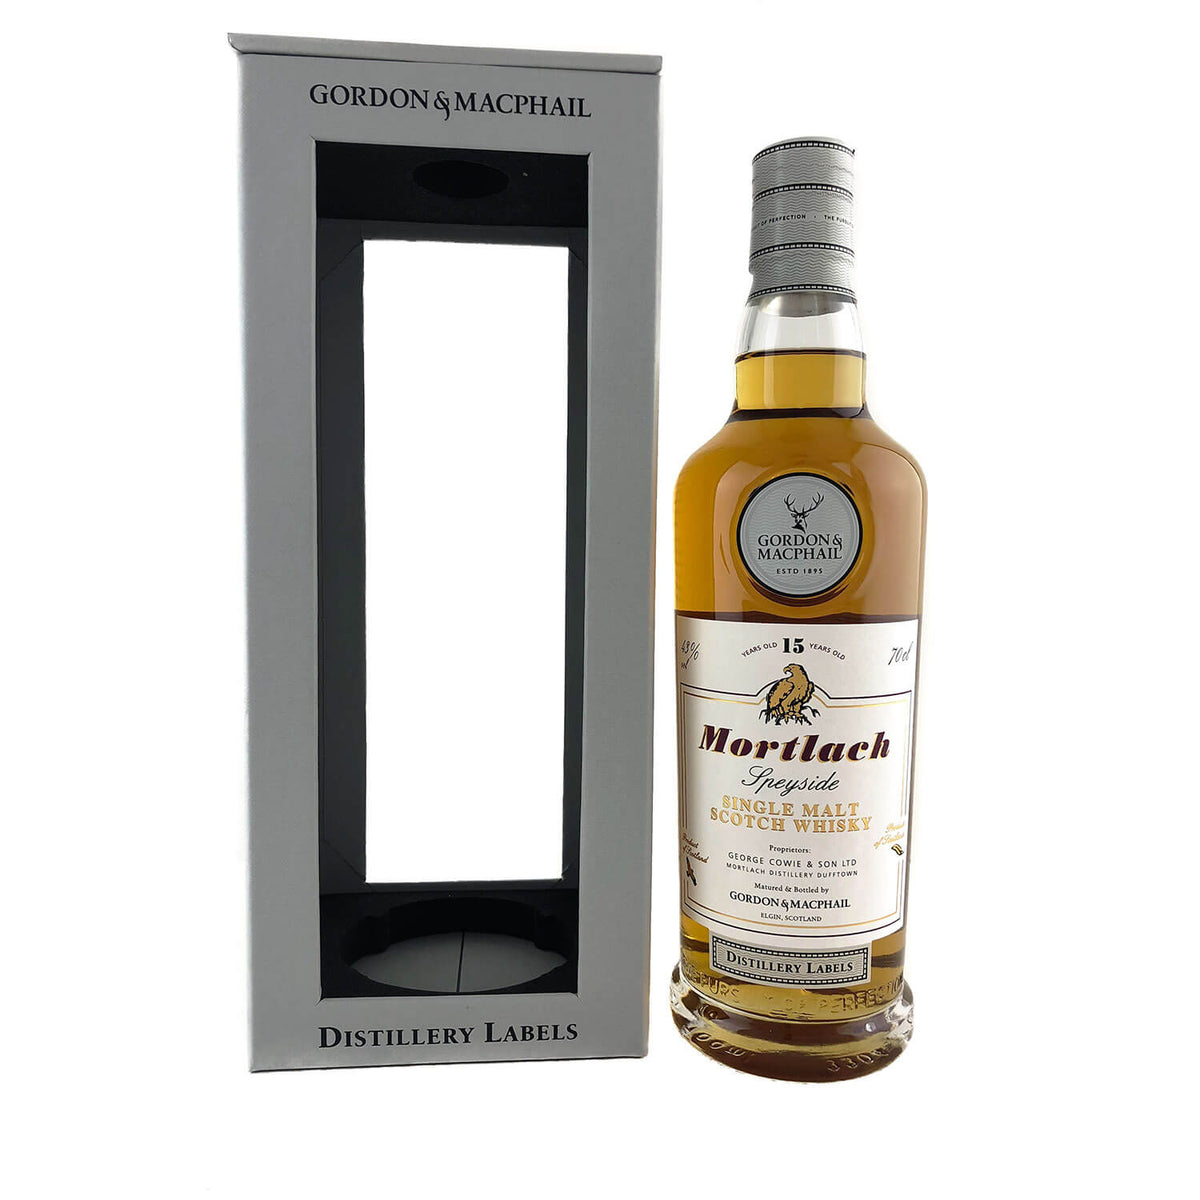 Gordon & Macphail Distillery Labels Mortlach 15 Year Old Single Malt Scotch Whisky 700ml